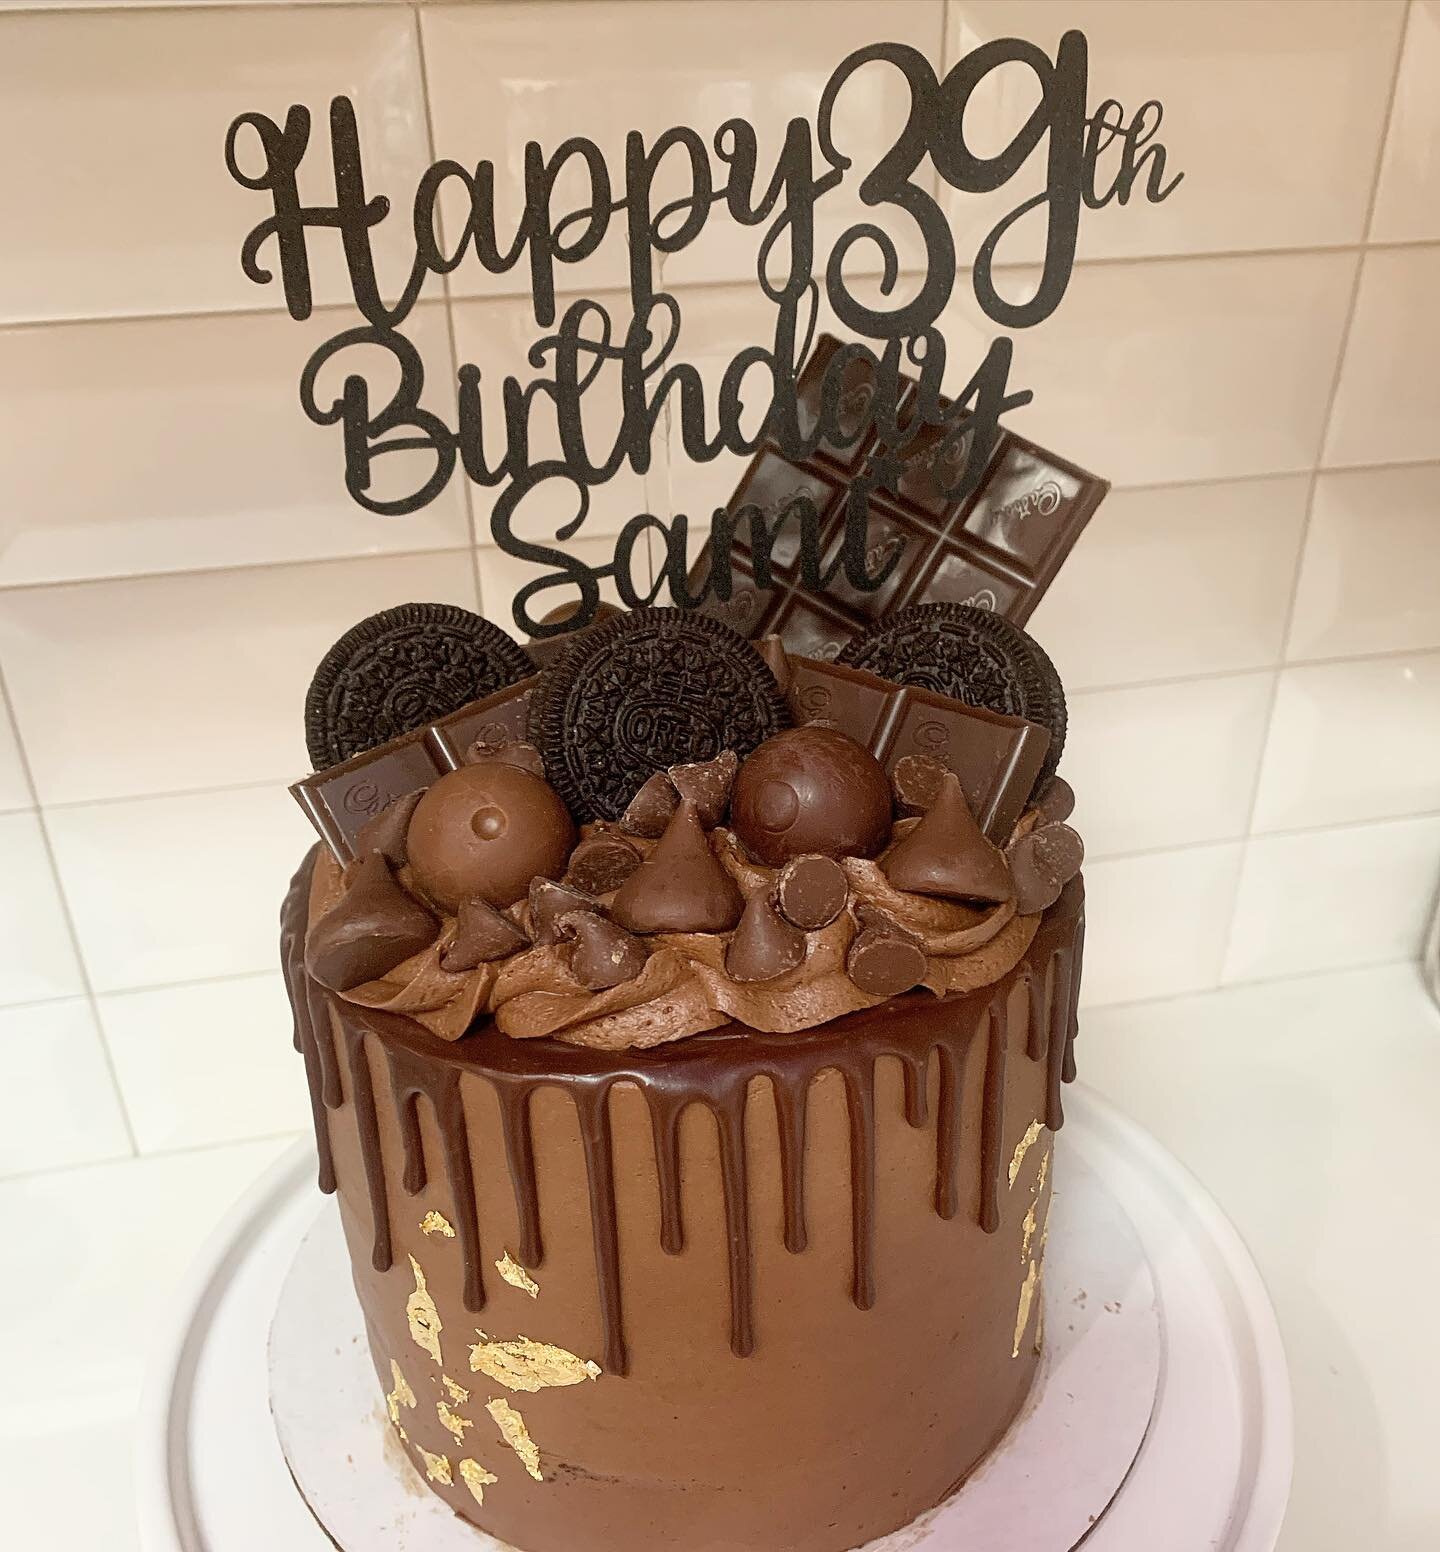 Uncle Samis choco birthday cake is maya approved ✔️🍫 happy birthday @samieldebs ❤️
.
.
.
.
.
.#cakesofinstagram #chocolatedecoratedcake #chocolatecake #cakestagram #chocolatedrip #chocolatebuttercream #birthdaycake #homebaker #customcakes